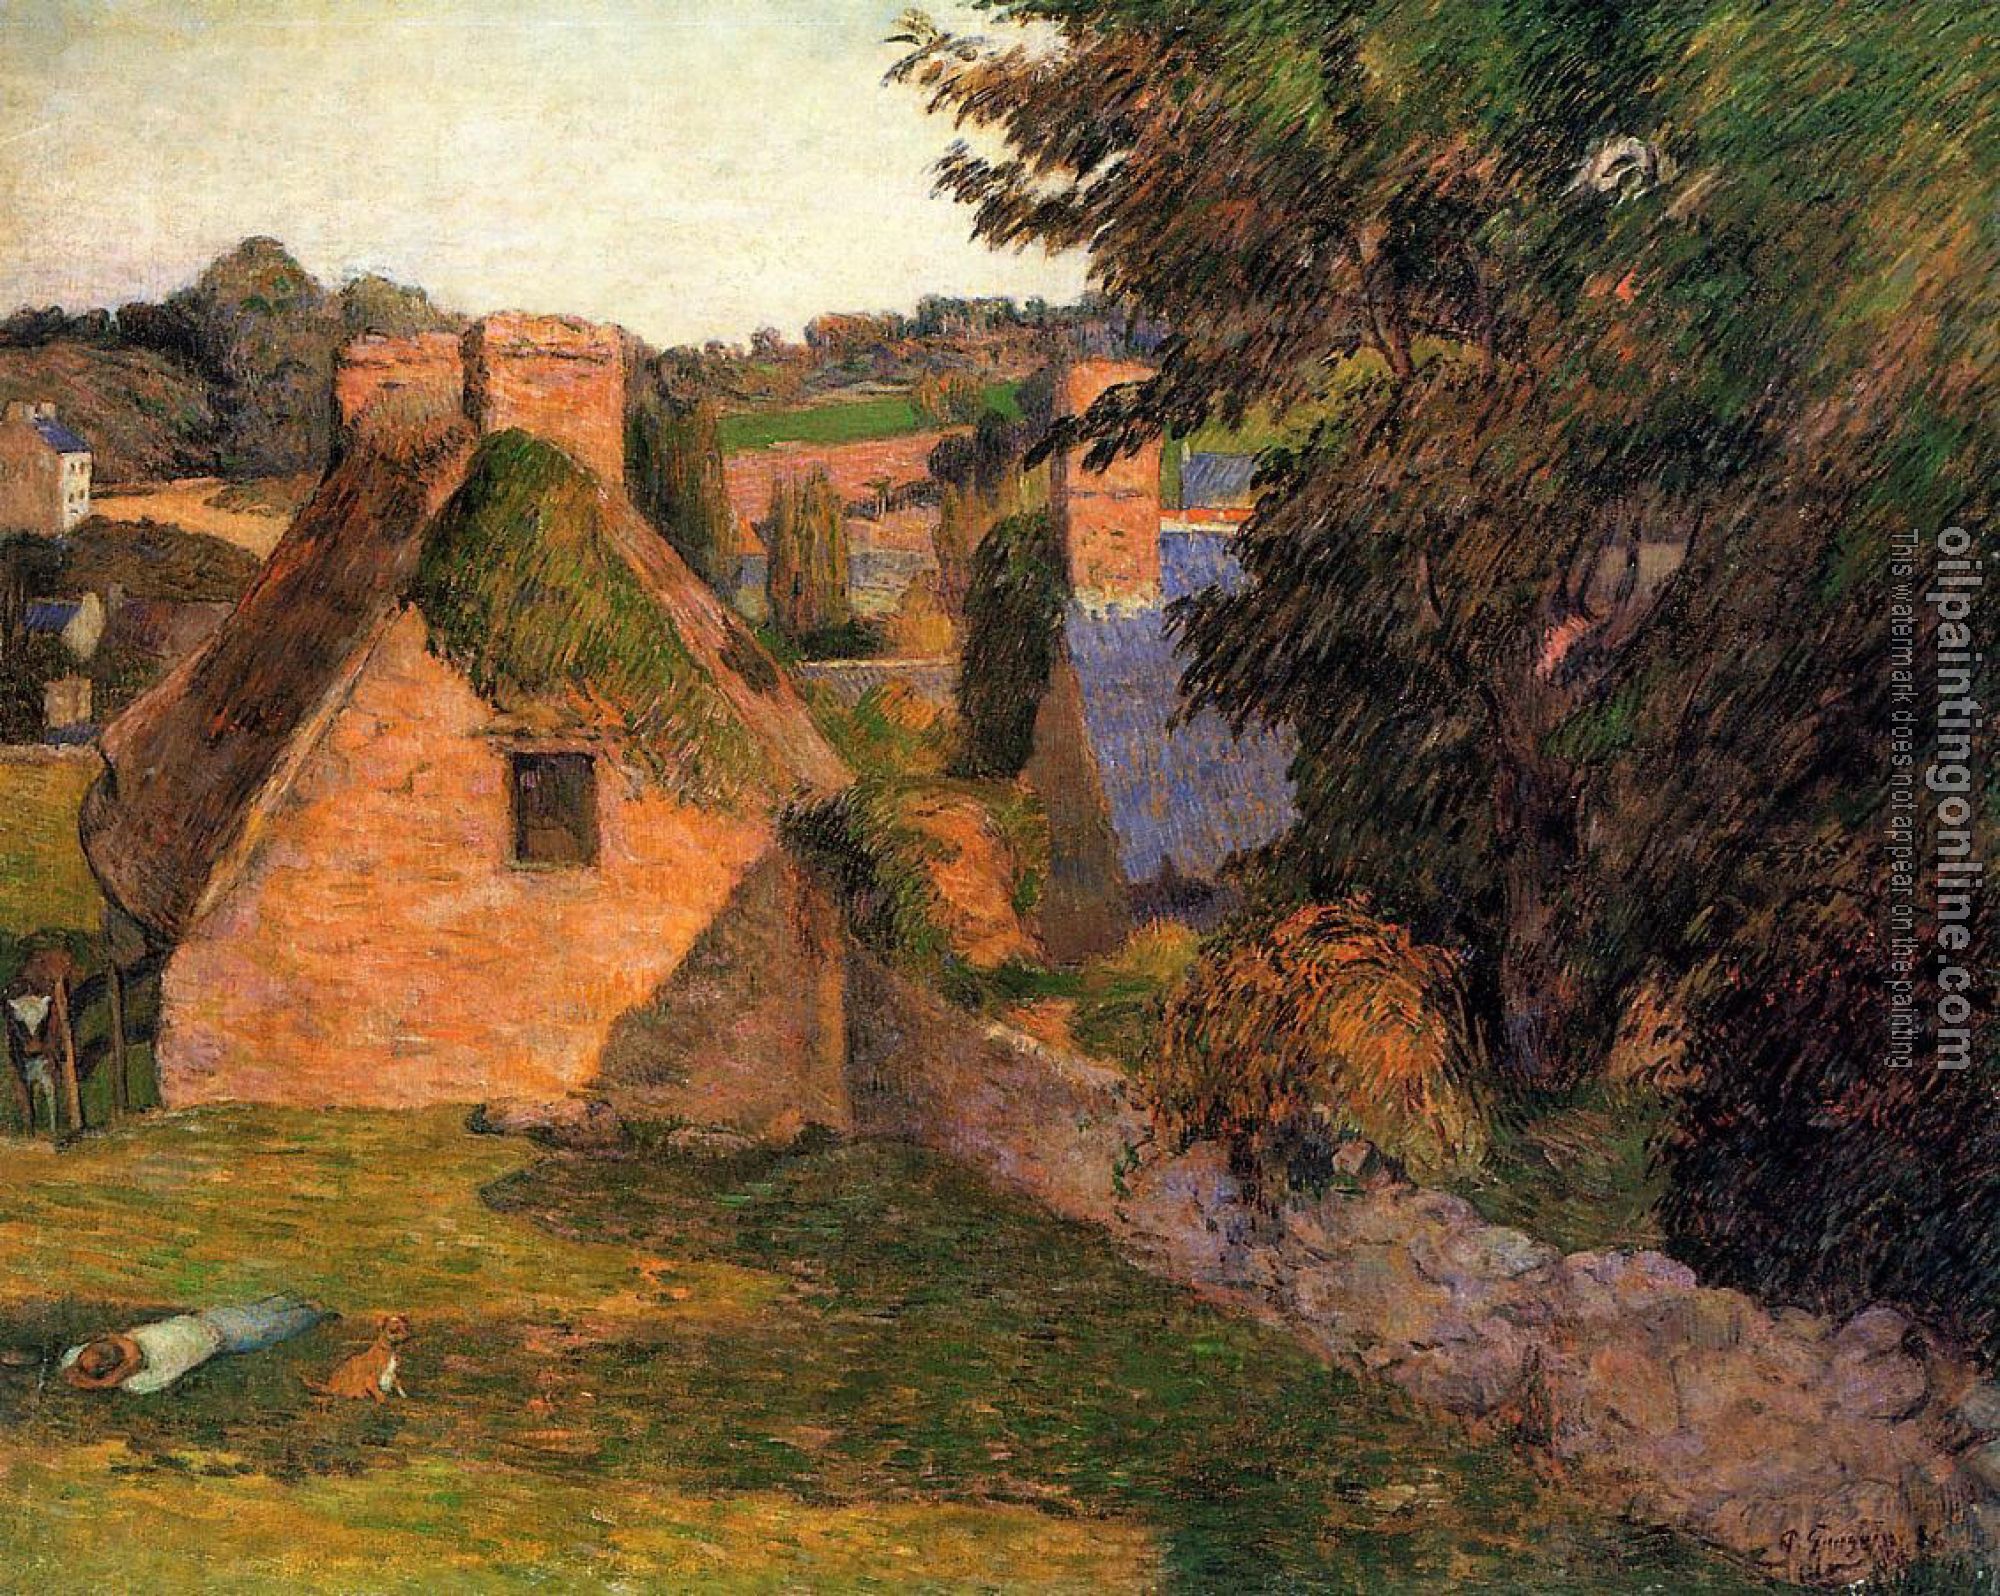 Gauguin, Paul - Lillichon Field